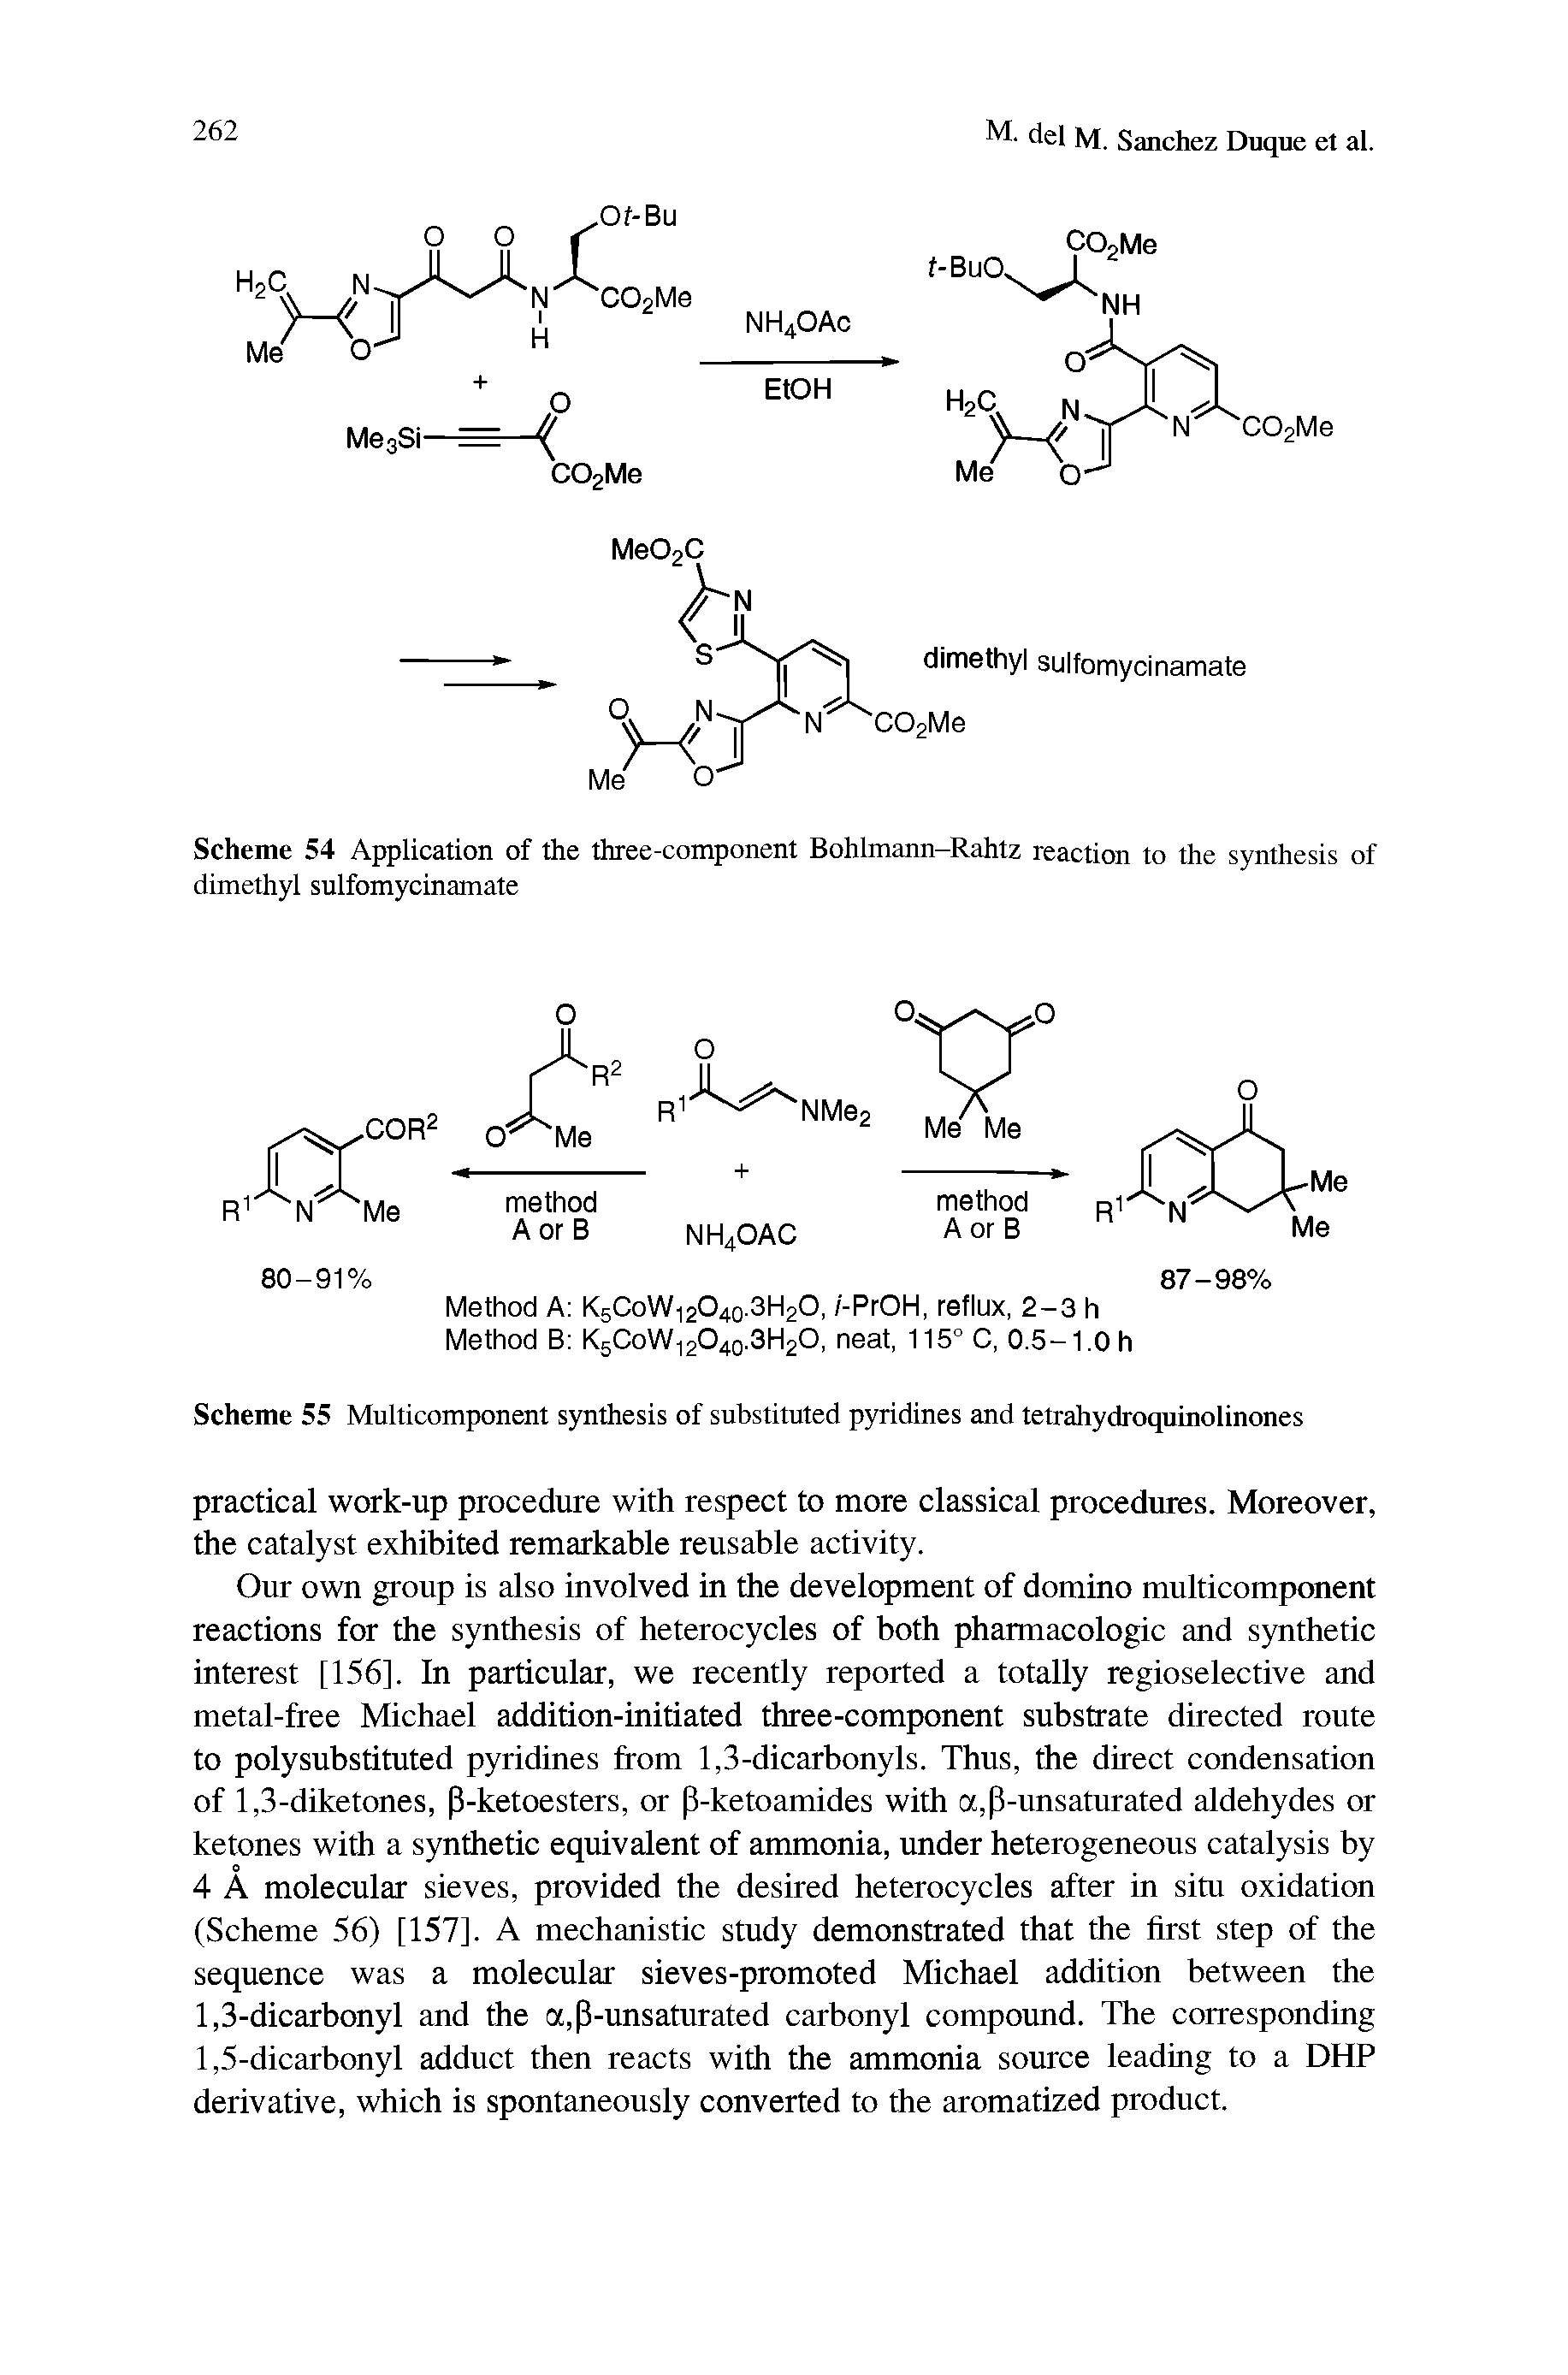 Scheme 54 Application of the three-component Bohlmann-Rahtz reaction to the synthesis of dimethyl sulfomycinamate...